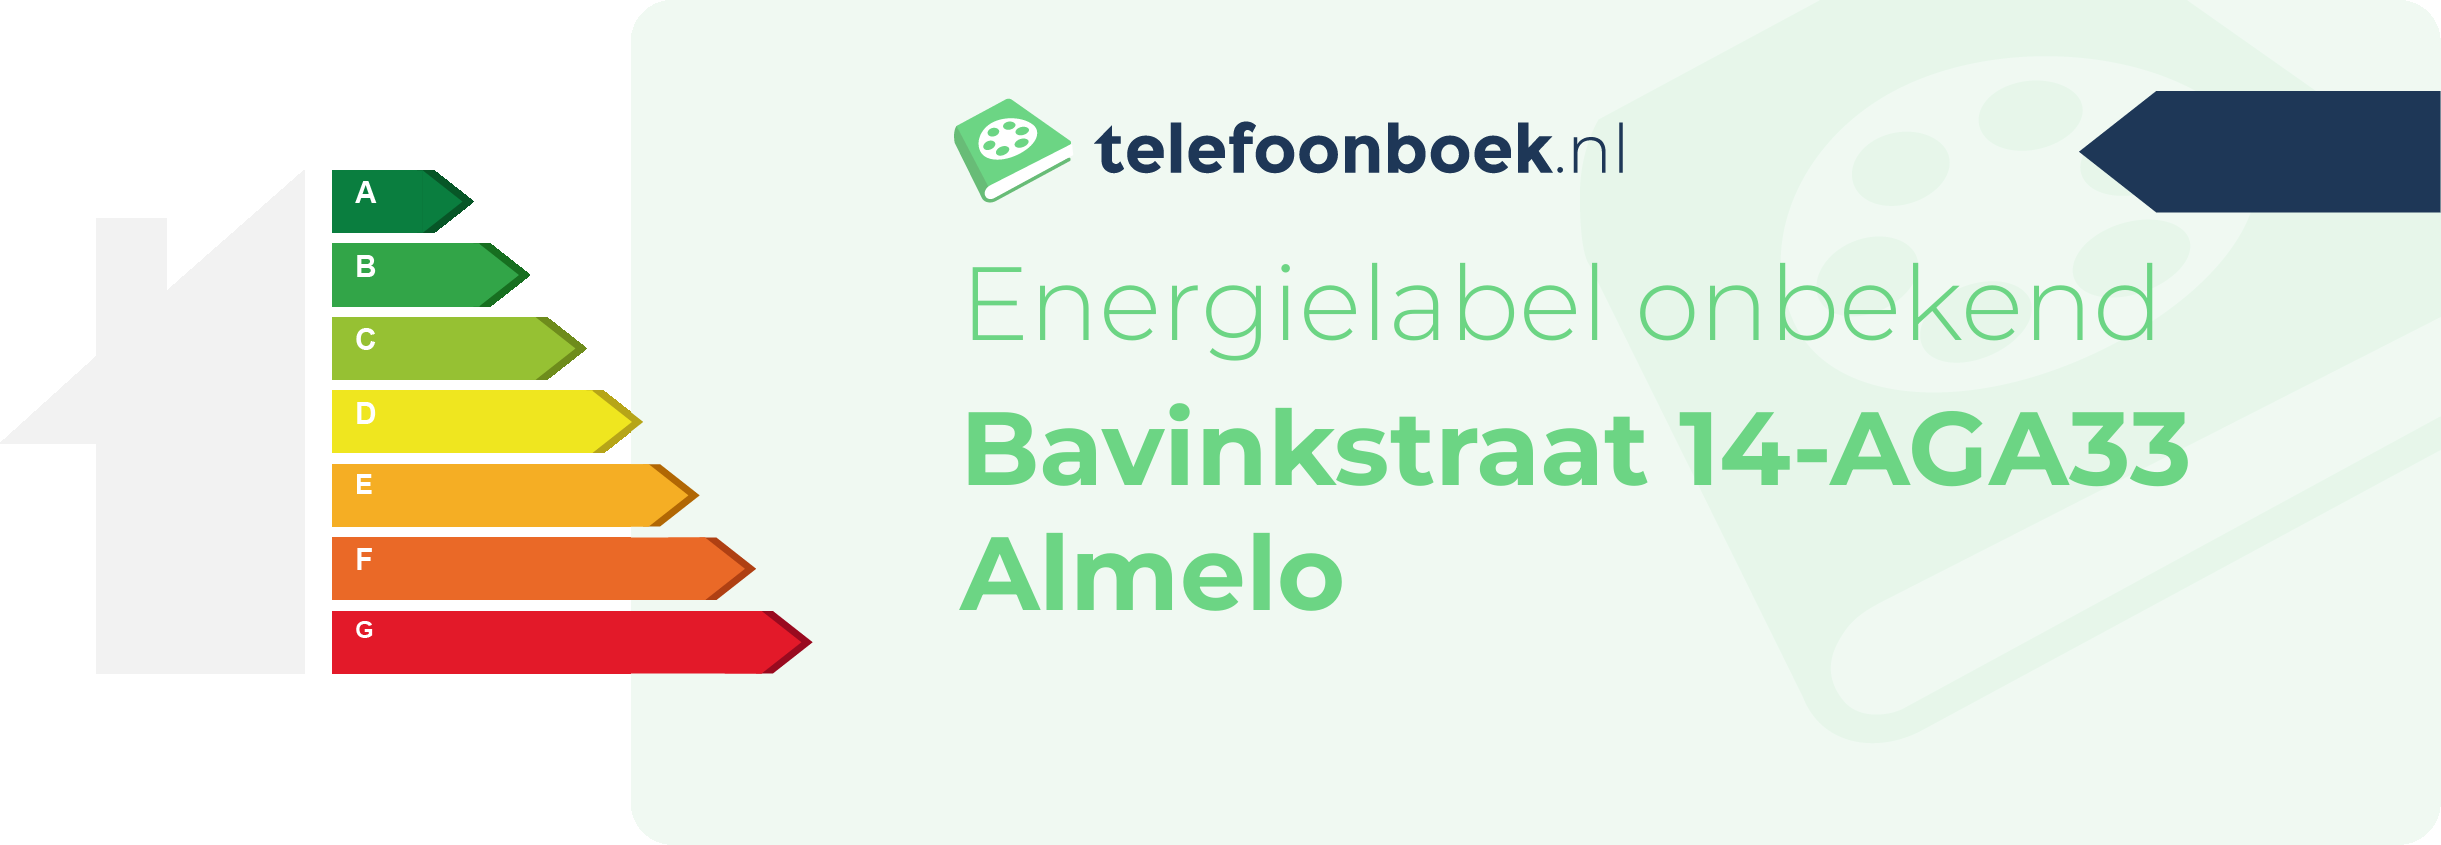 Energielabel Bavinkstraat 14-AGA33 Almelo